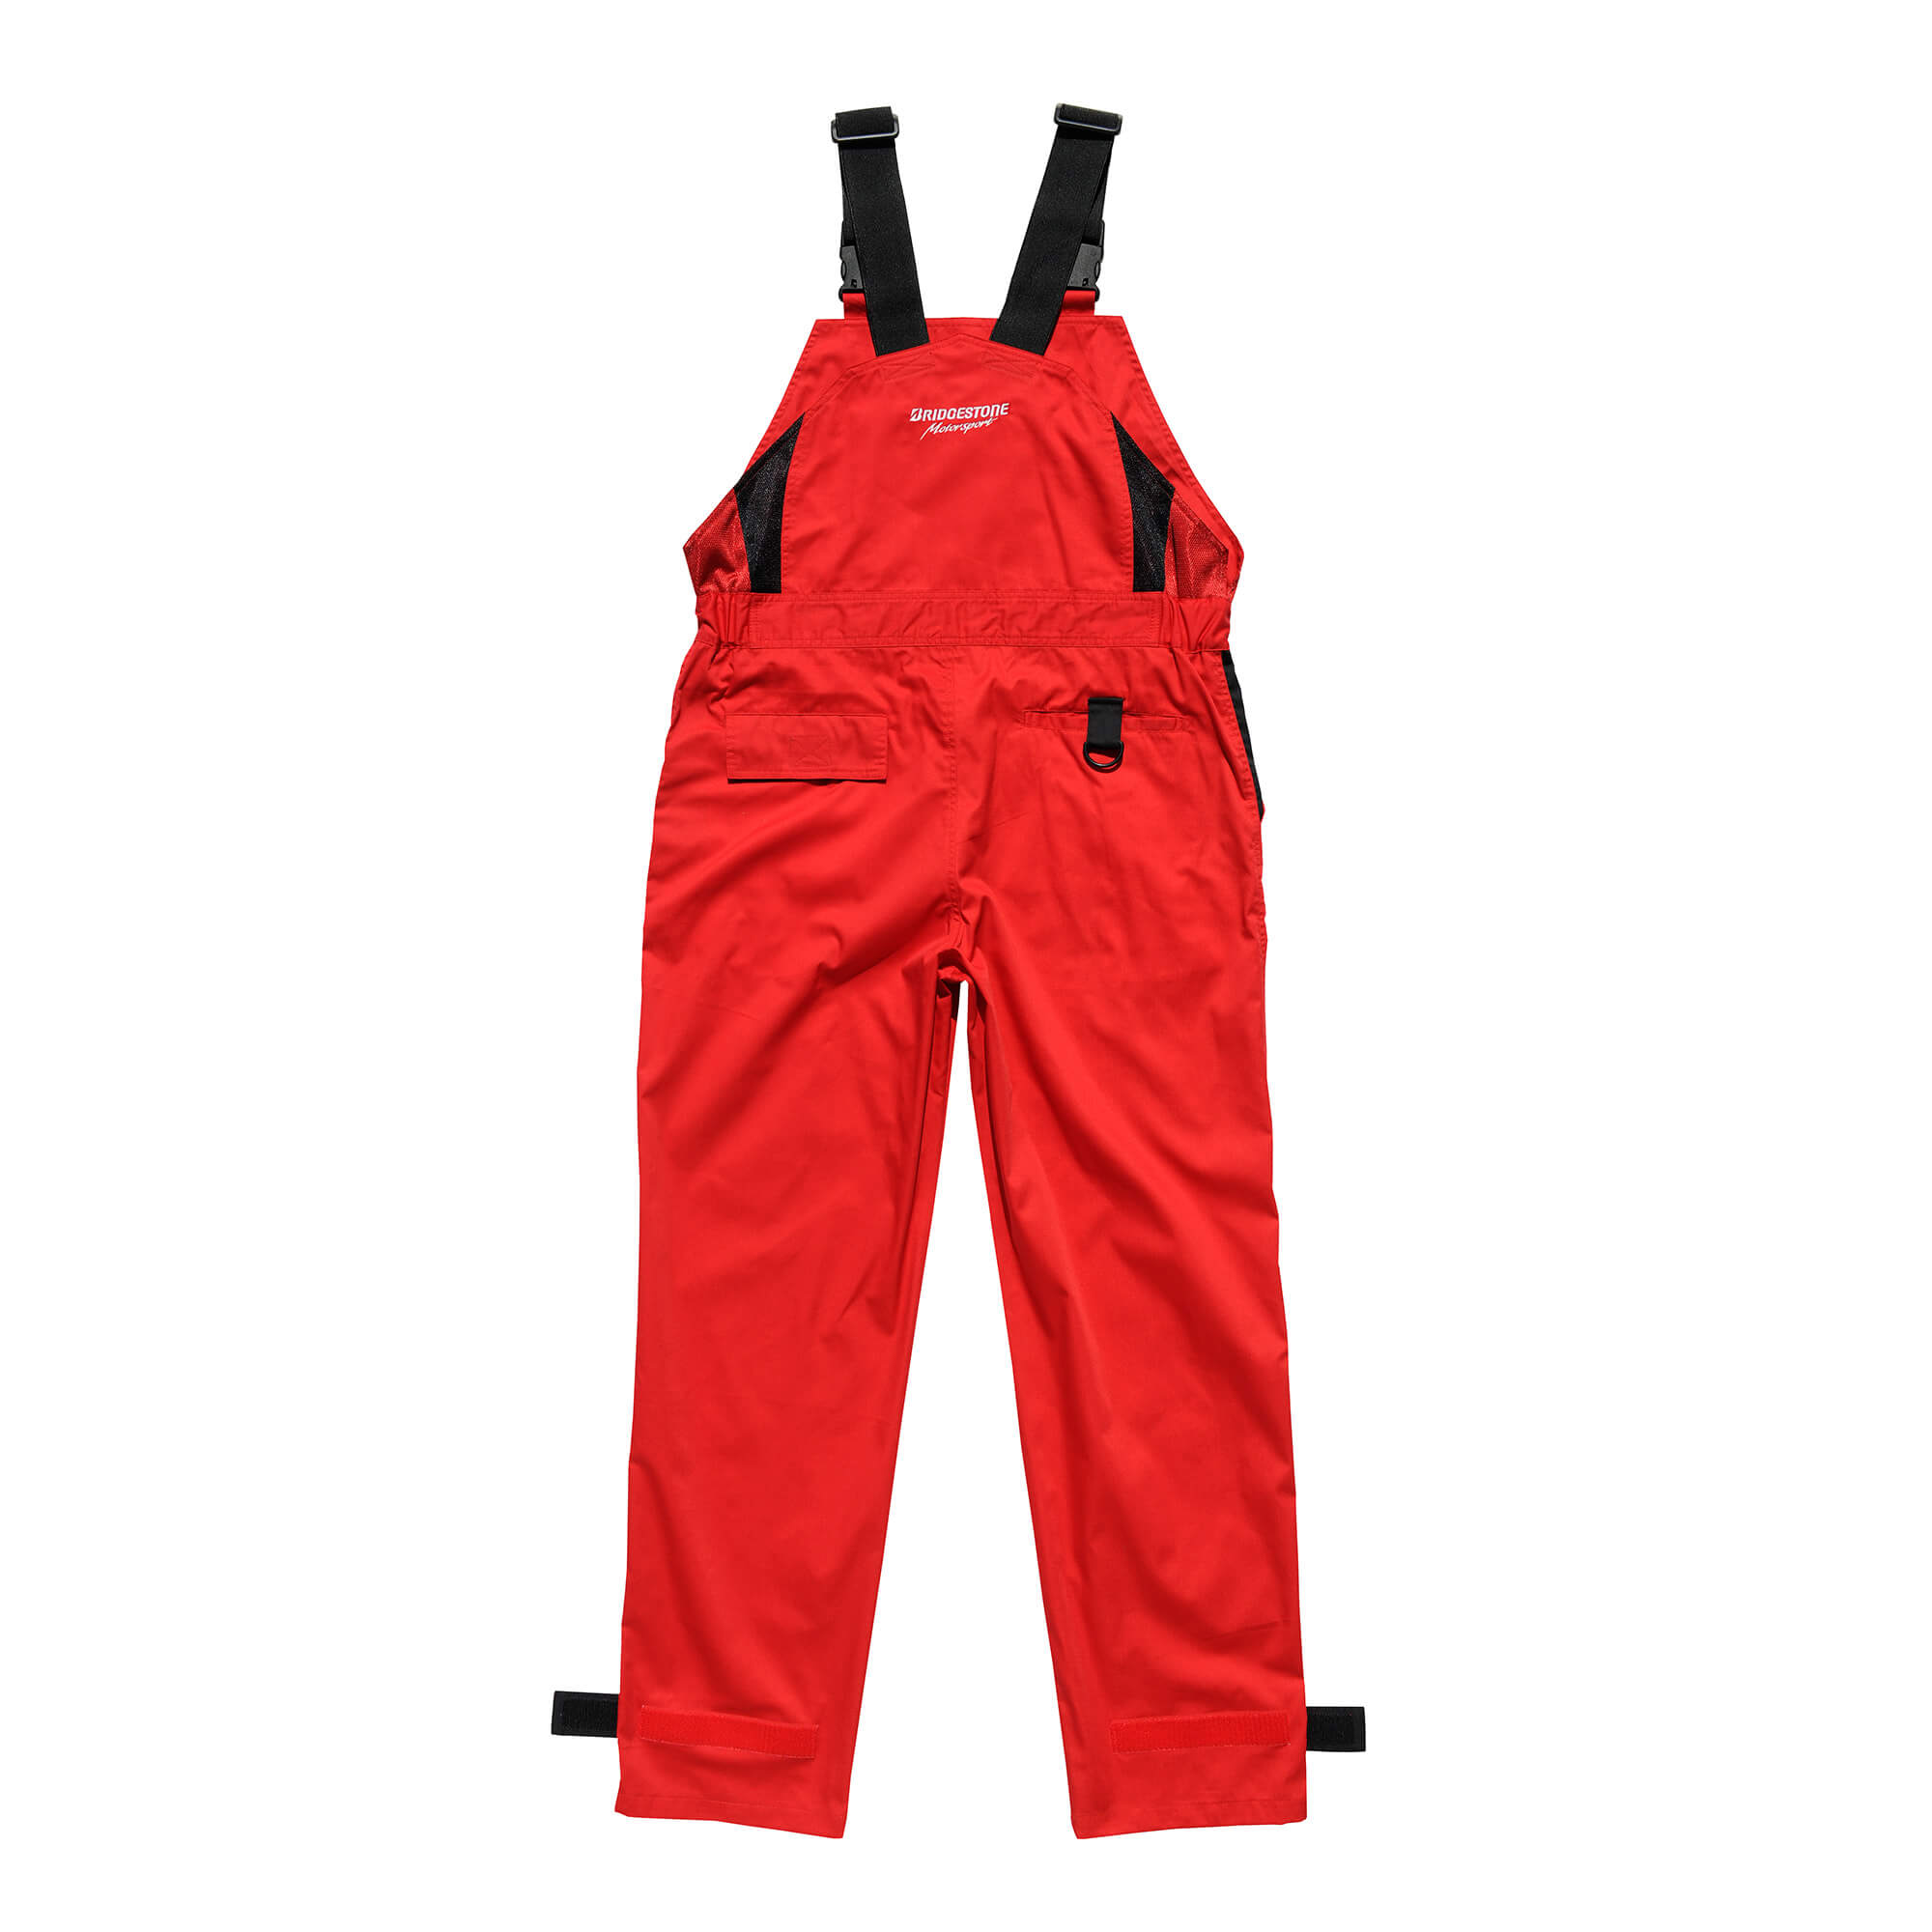 BRIDGESTONE Motorsport サロペット LL RED 作業服 - パンツ